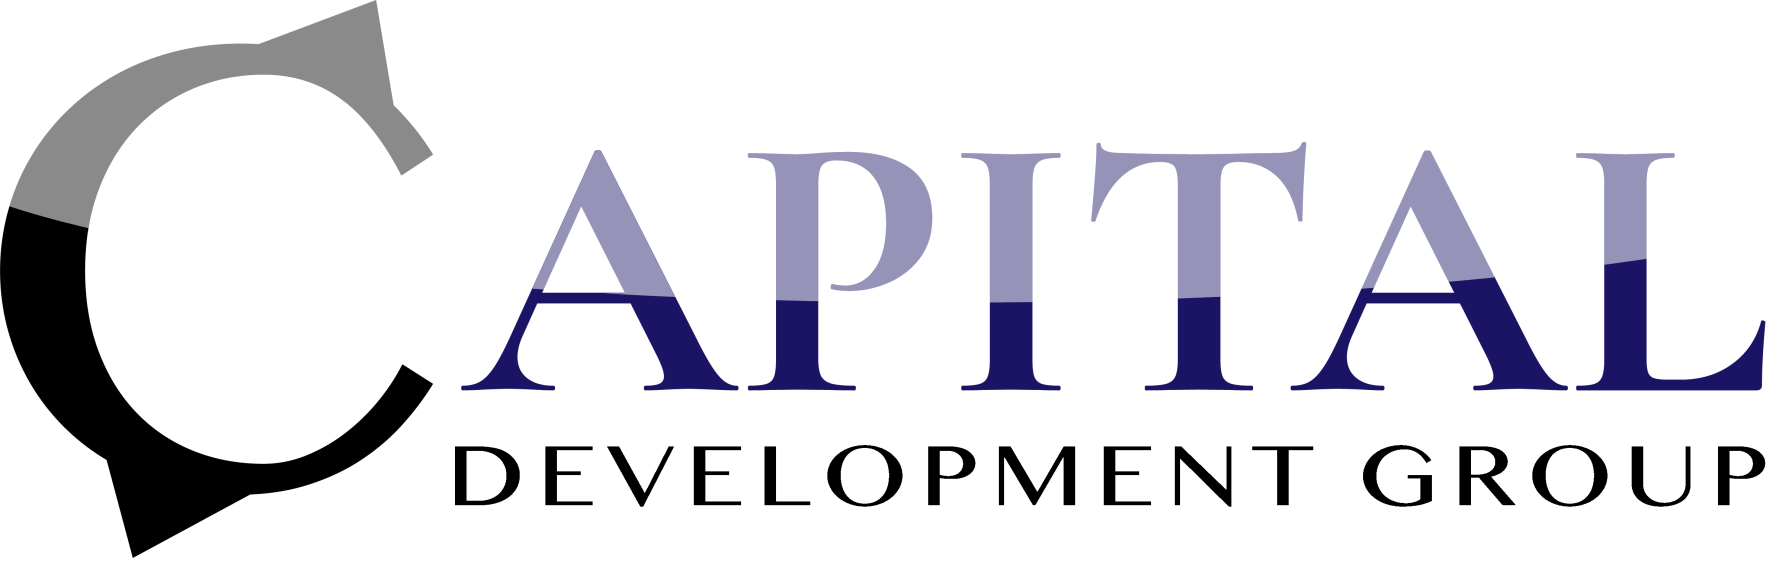 Capital Development Group